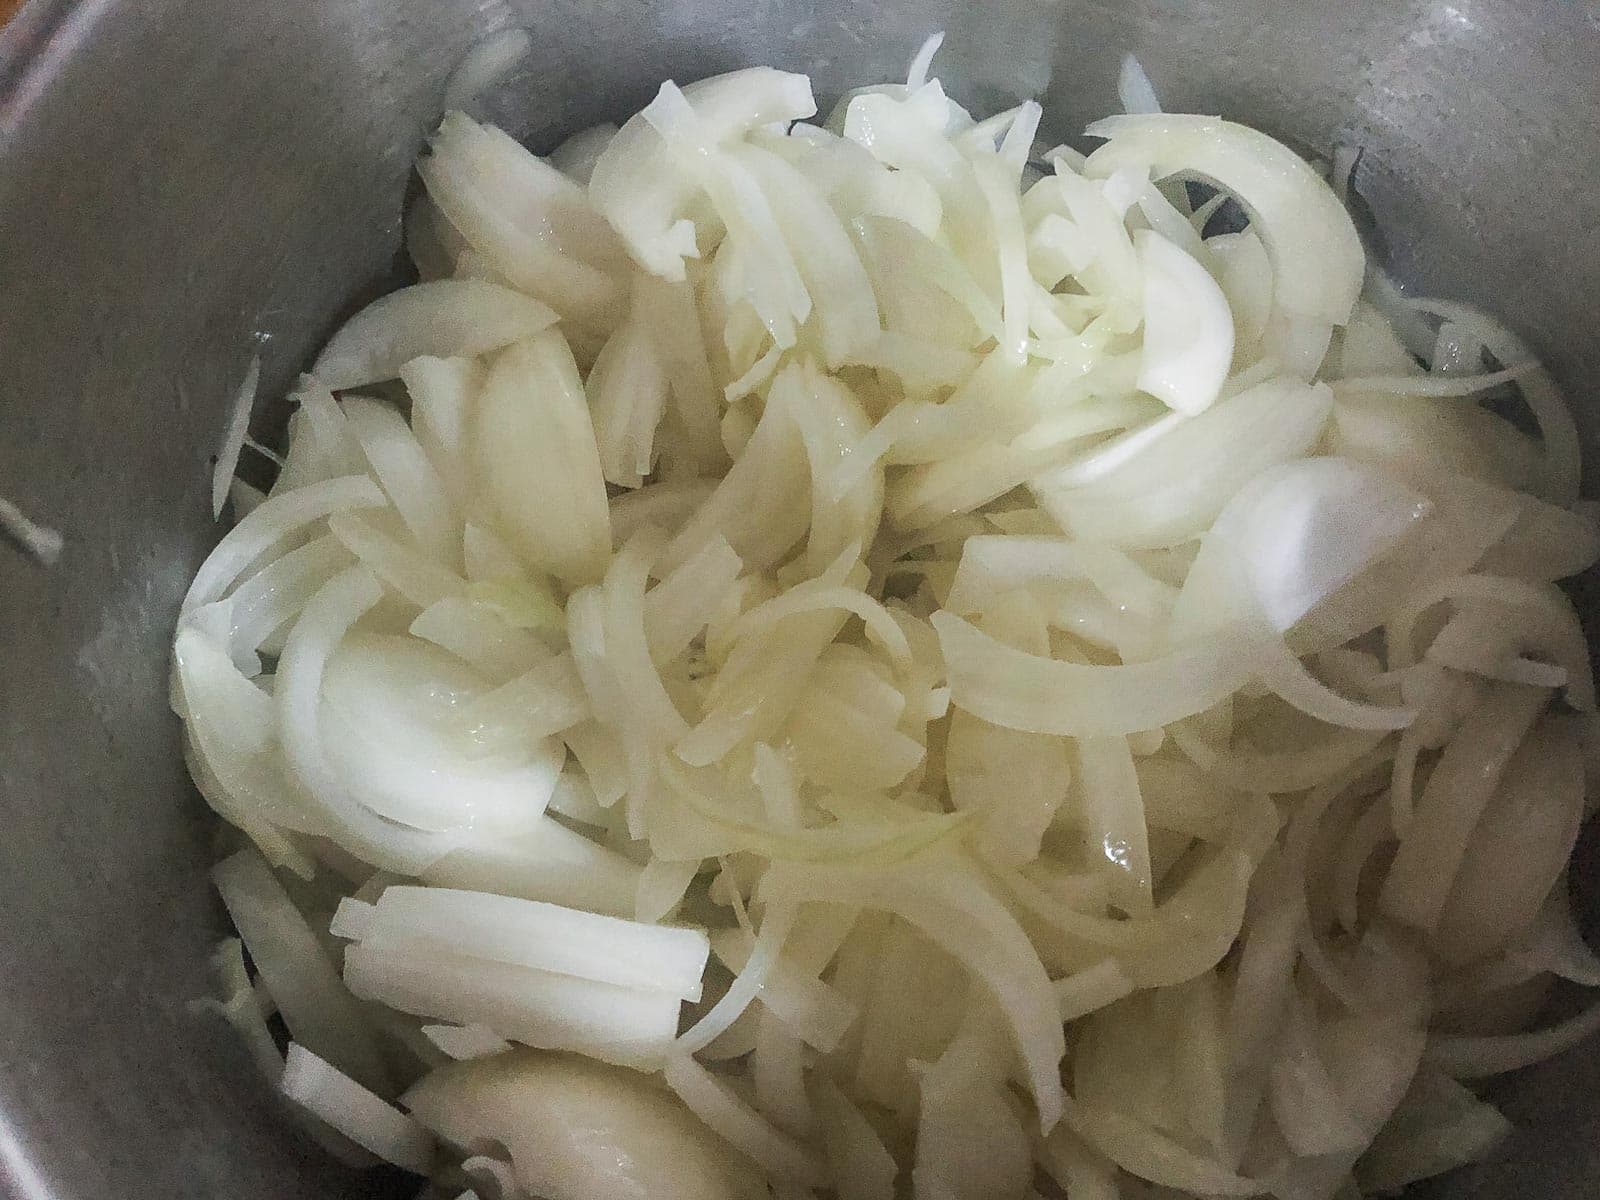 Sautéed sliced onions